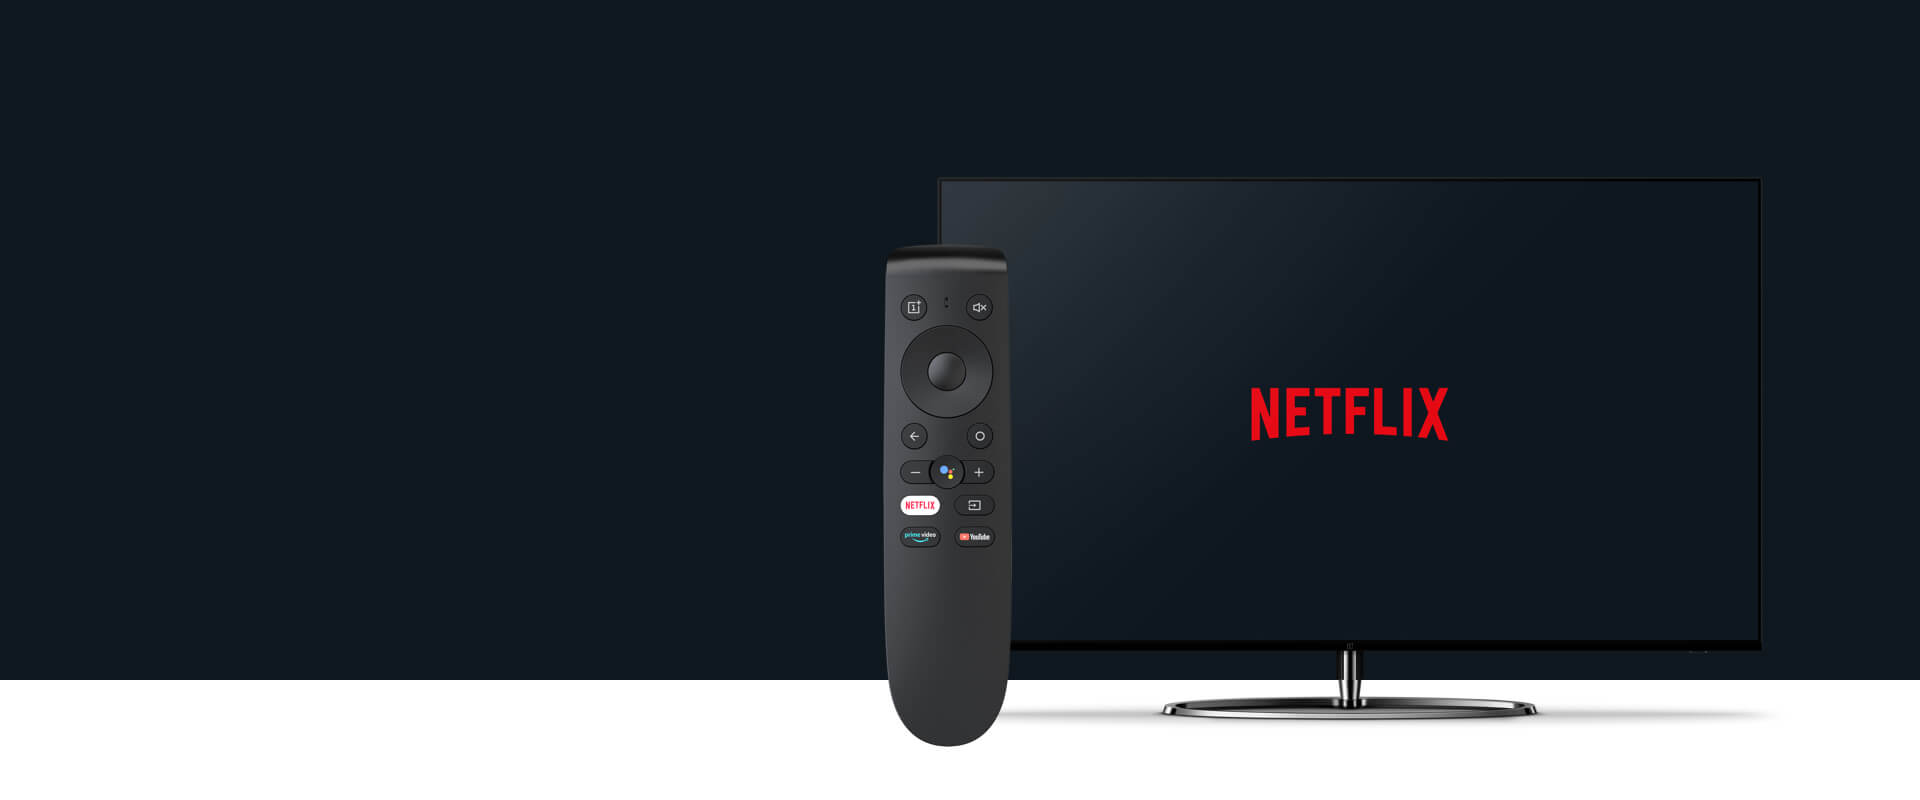 https://www.gizmochina.com/wp-content/uploads/2019/12/OnePlus-Netflix-Remote.jpg